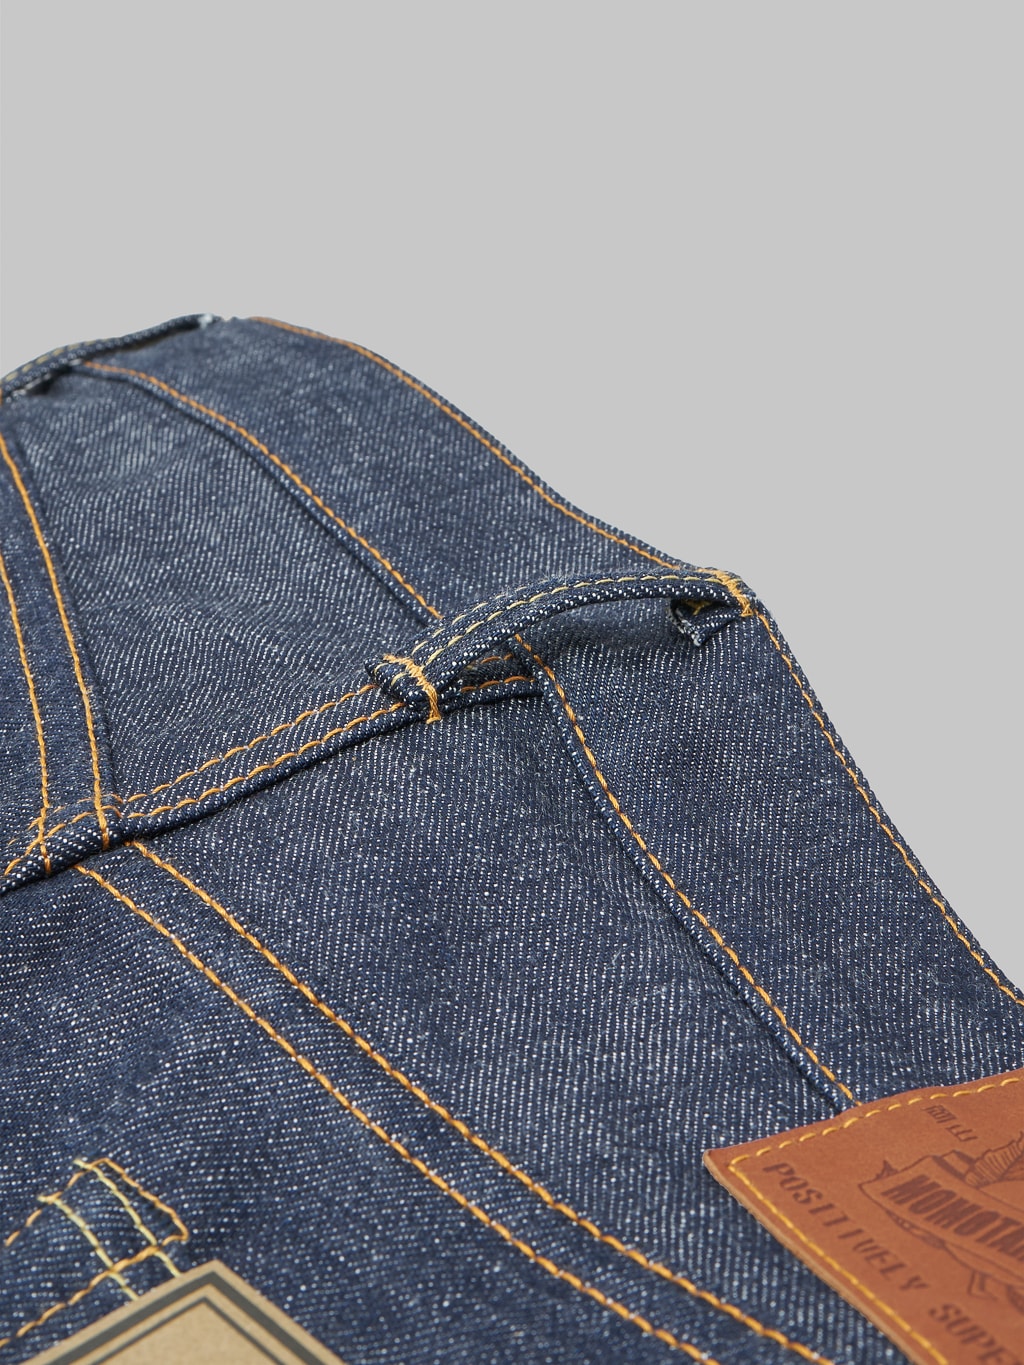 Momotaro 0306 40 Legacy Blue Tight Tapered Jeans belt loop